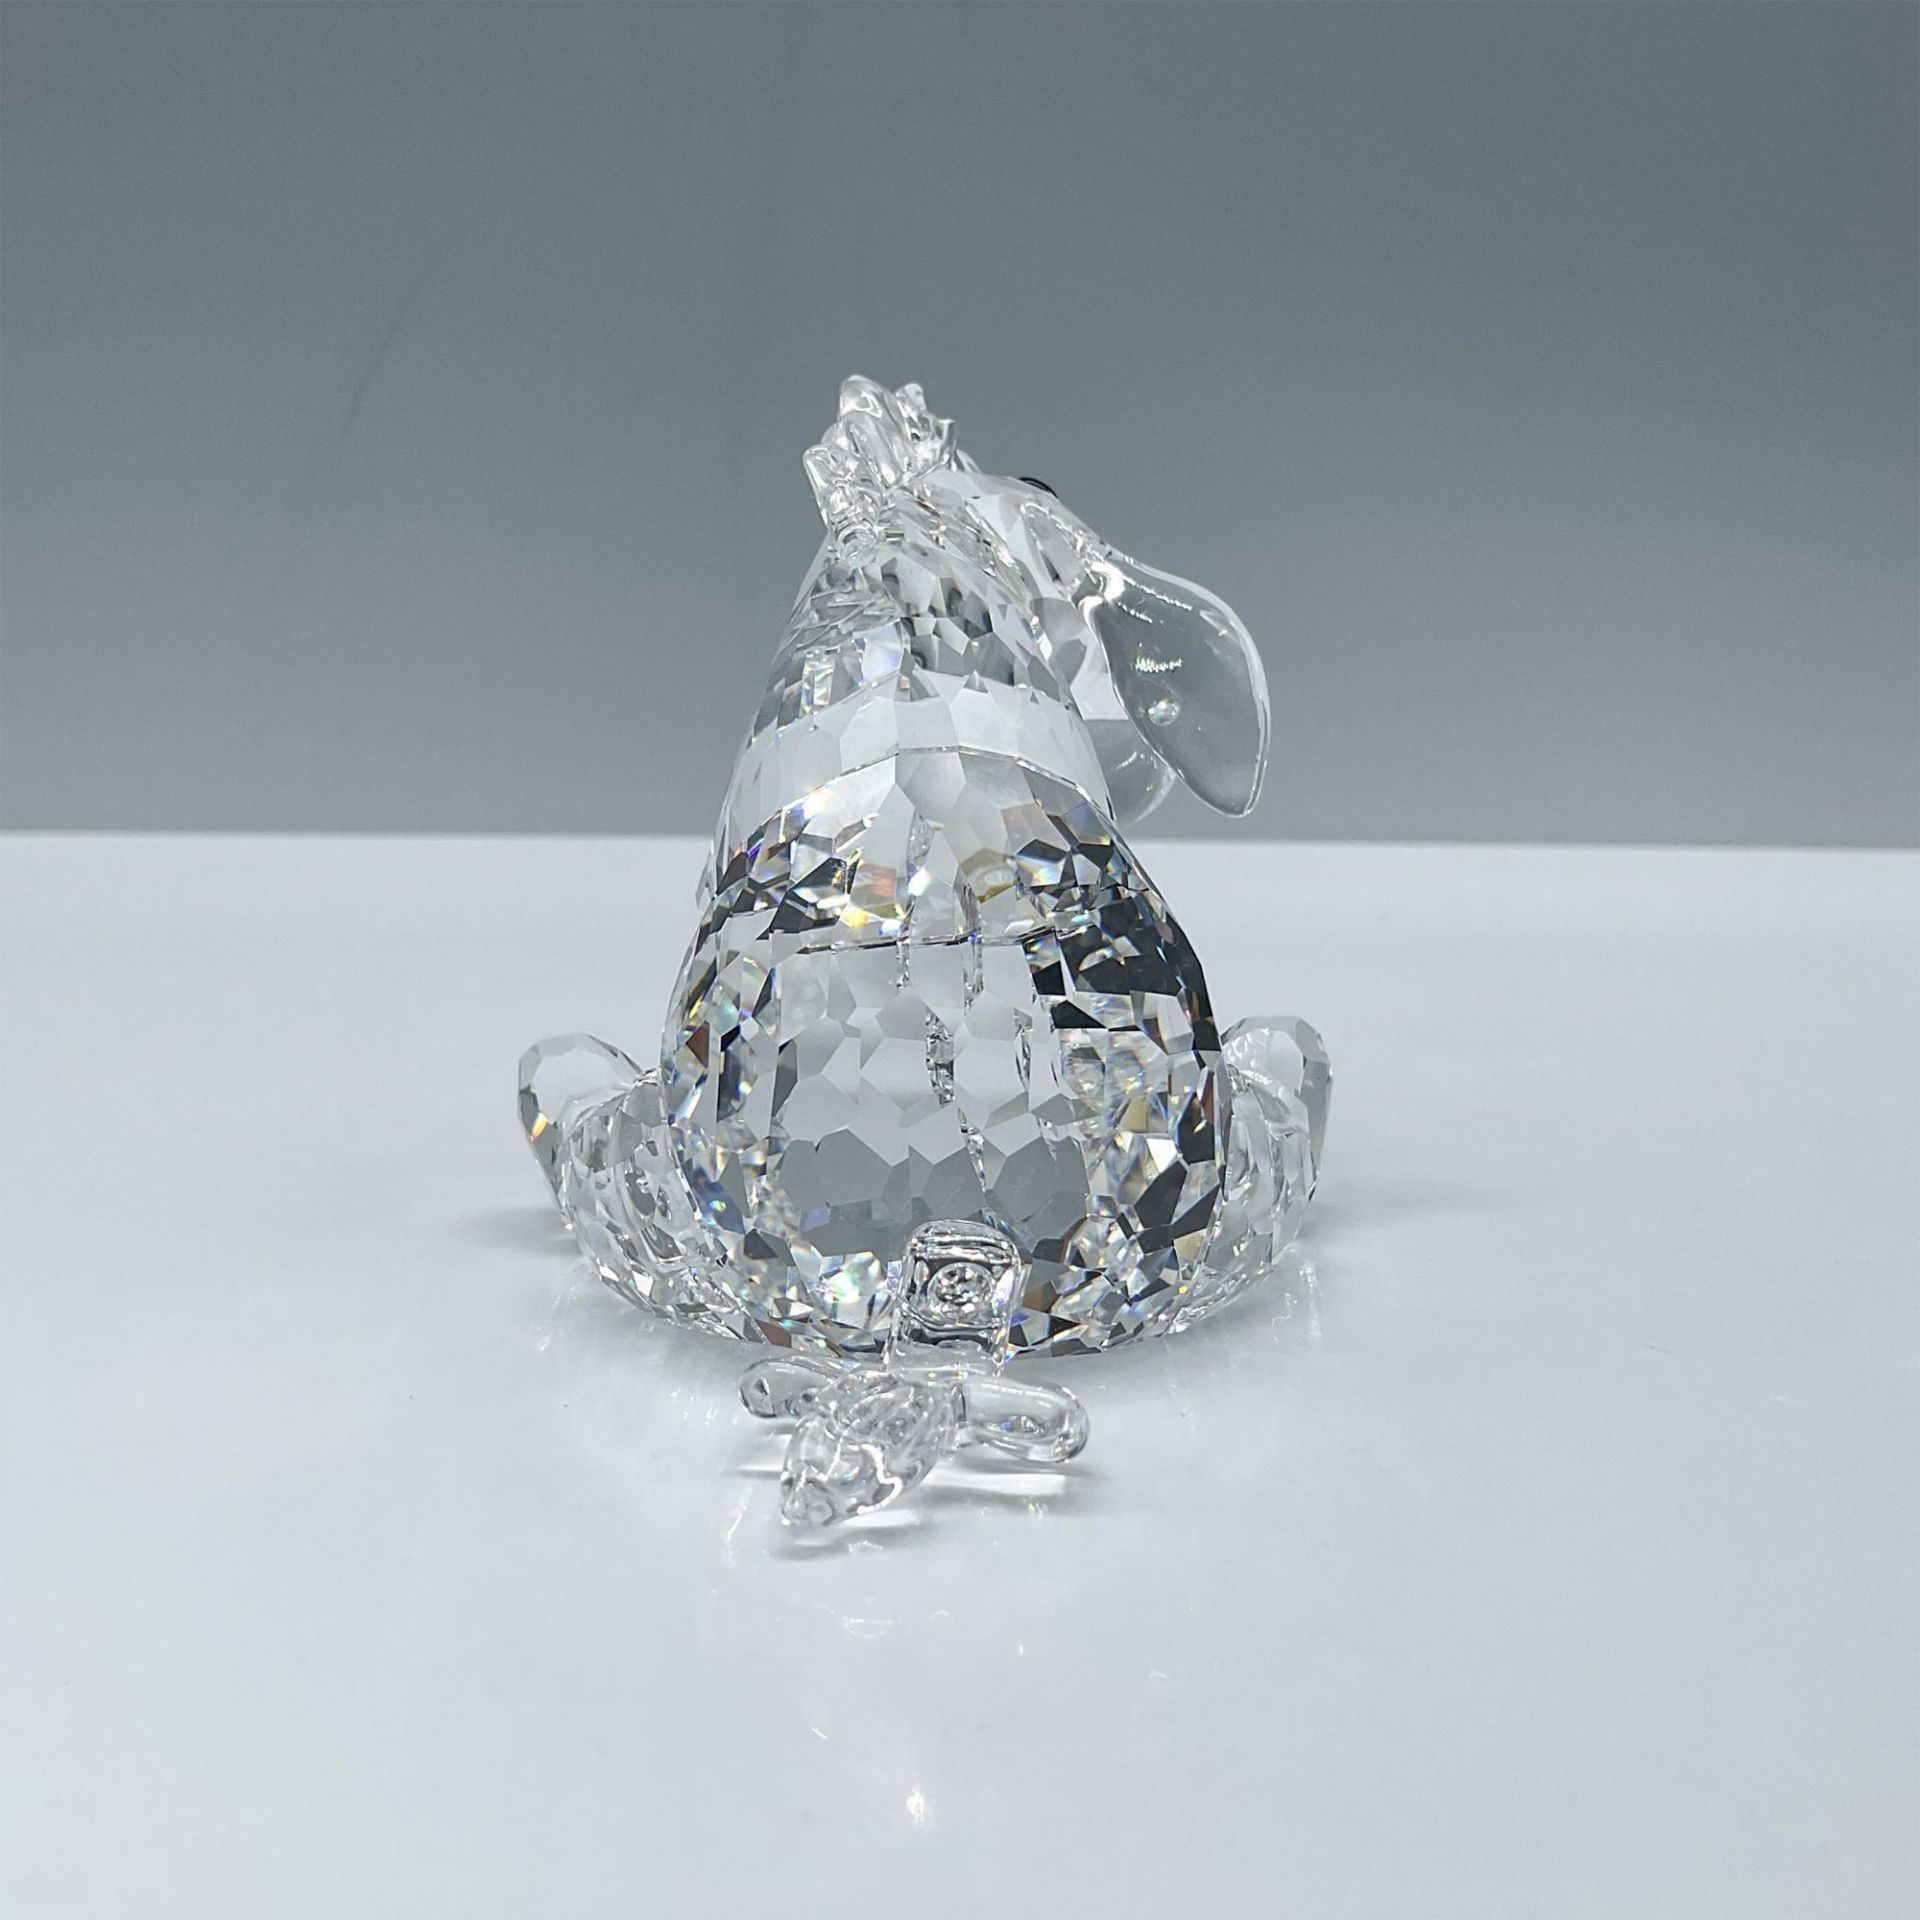 Swarovski Crystal Figurine, Eeyore - Bild 2 aus 4